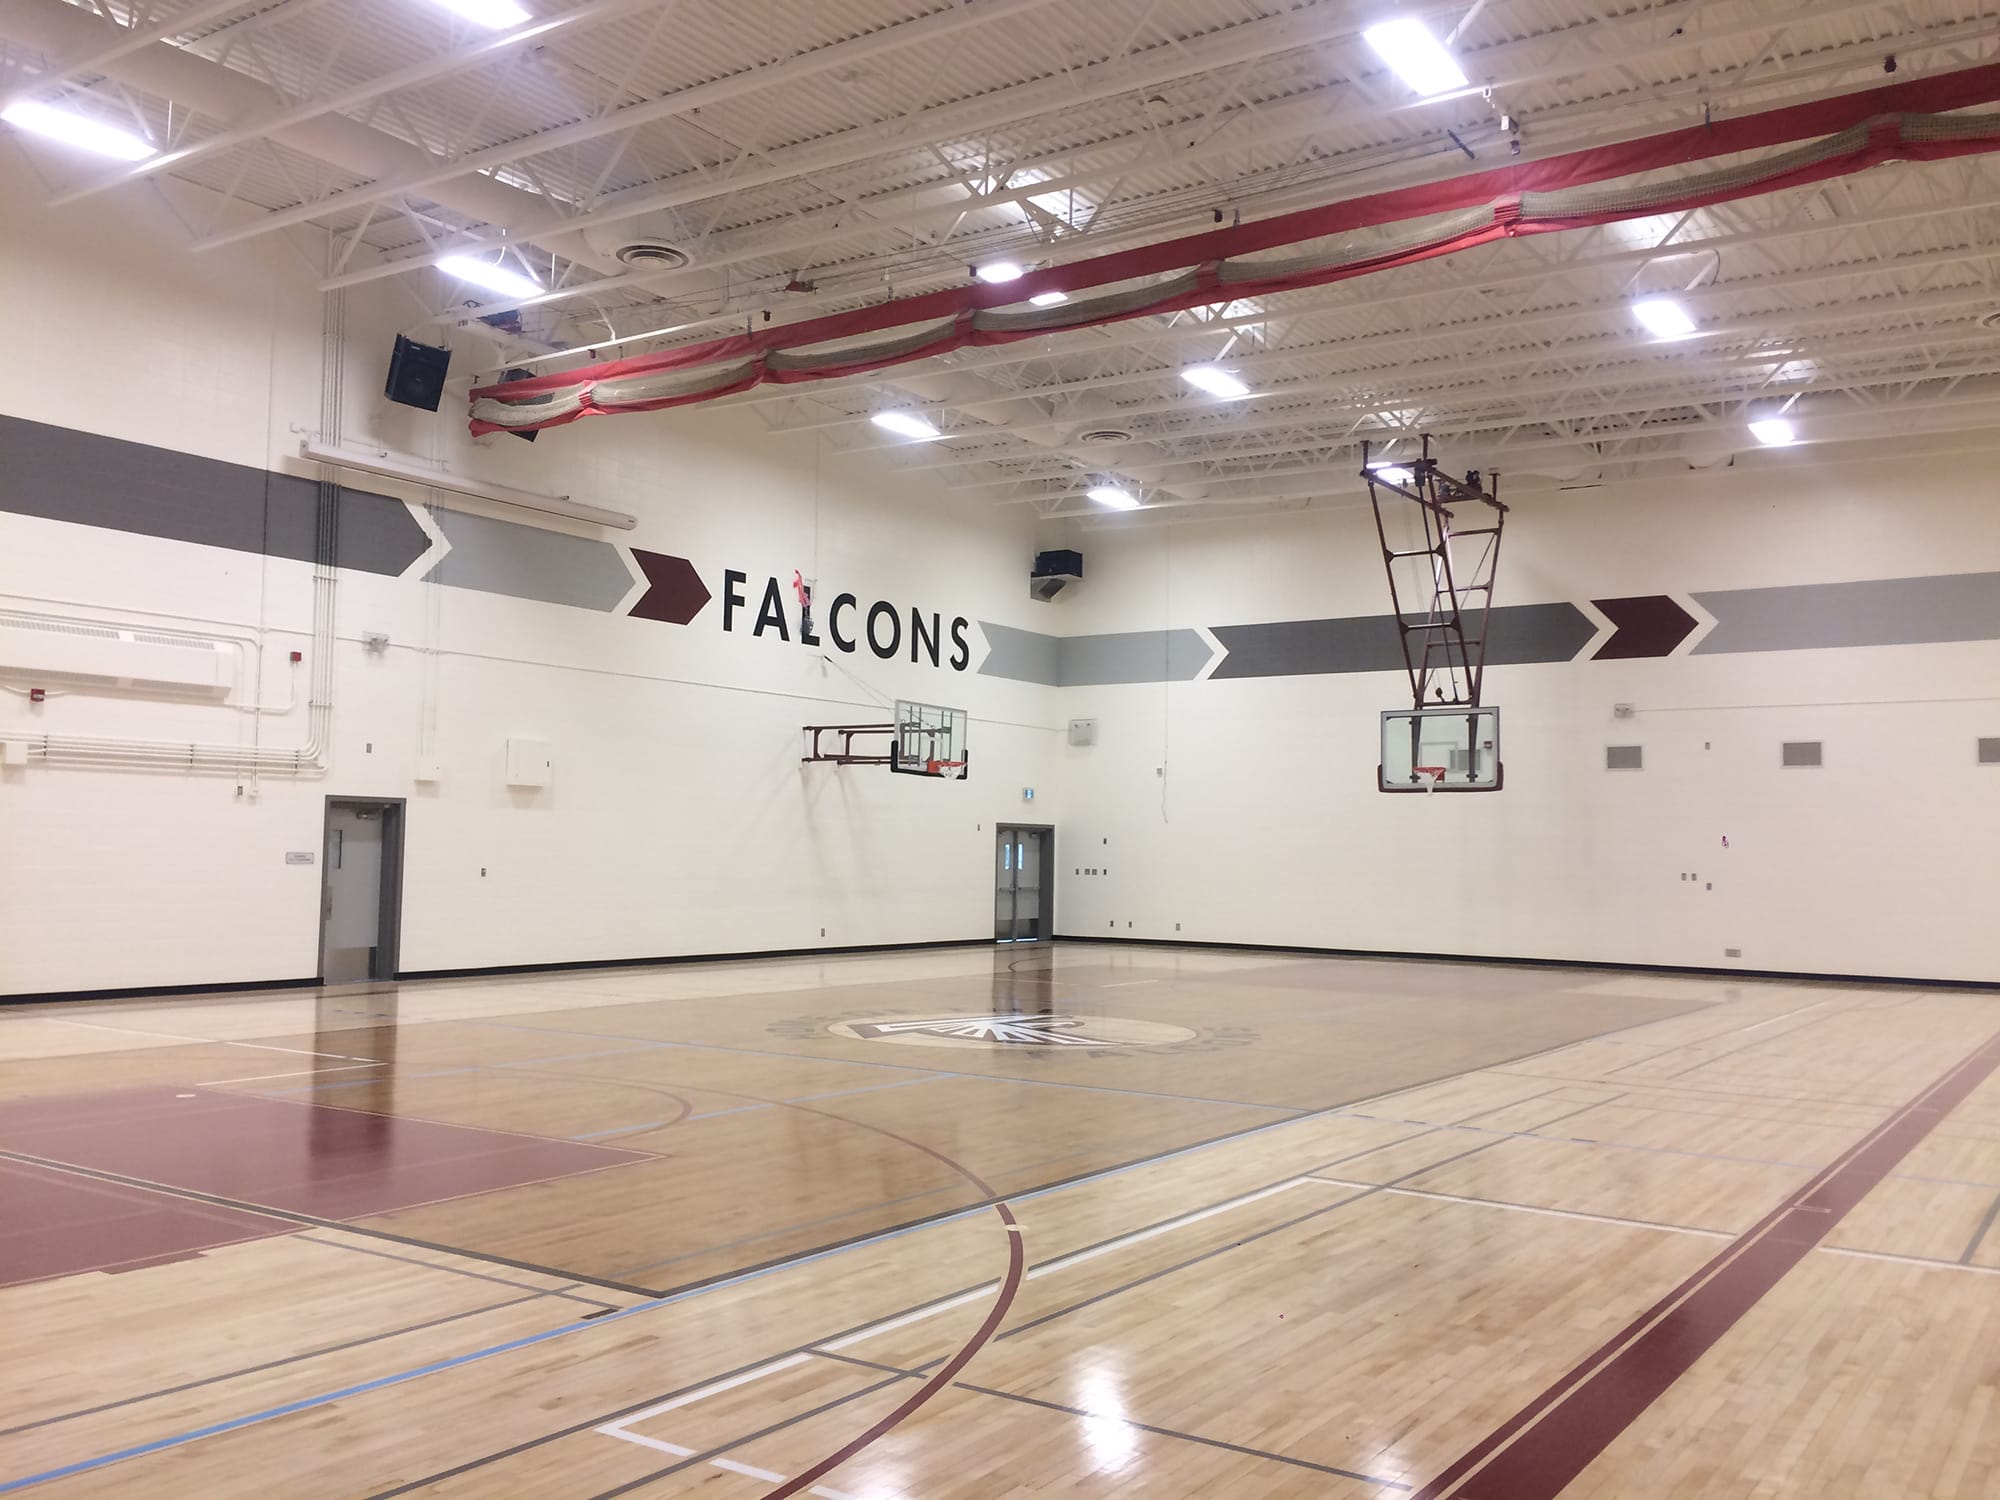 Foothills Composite High School interior of the gymnasium